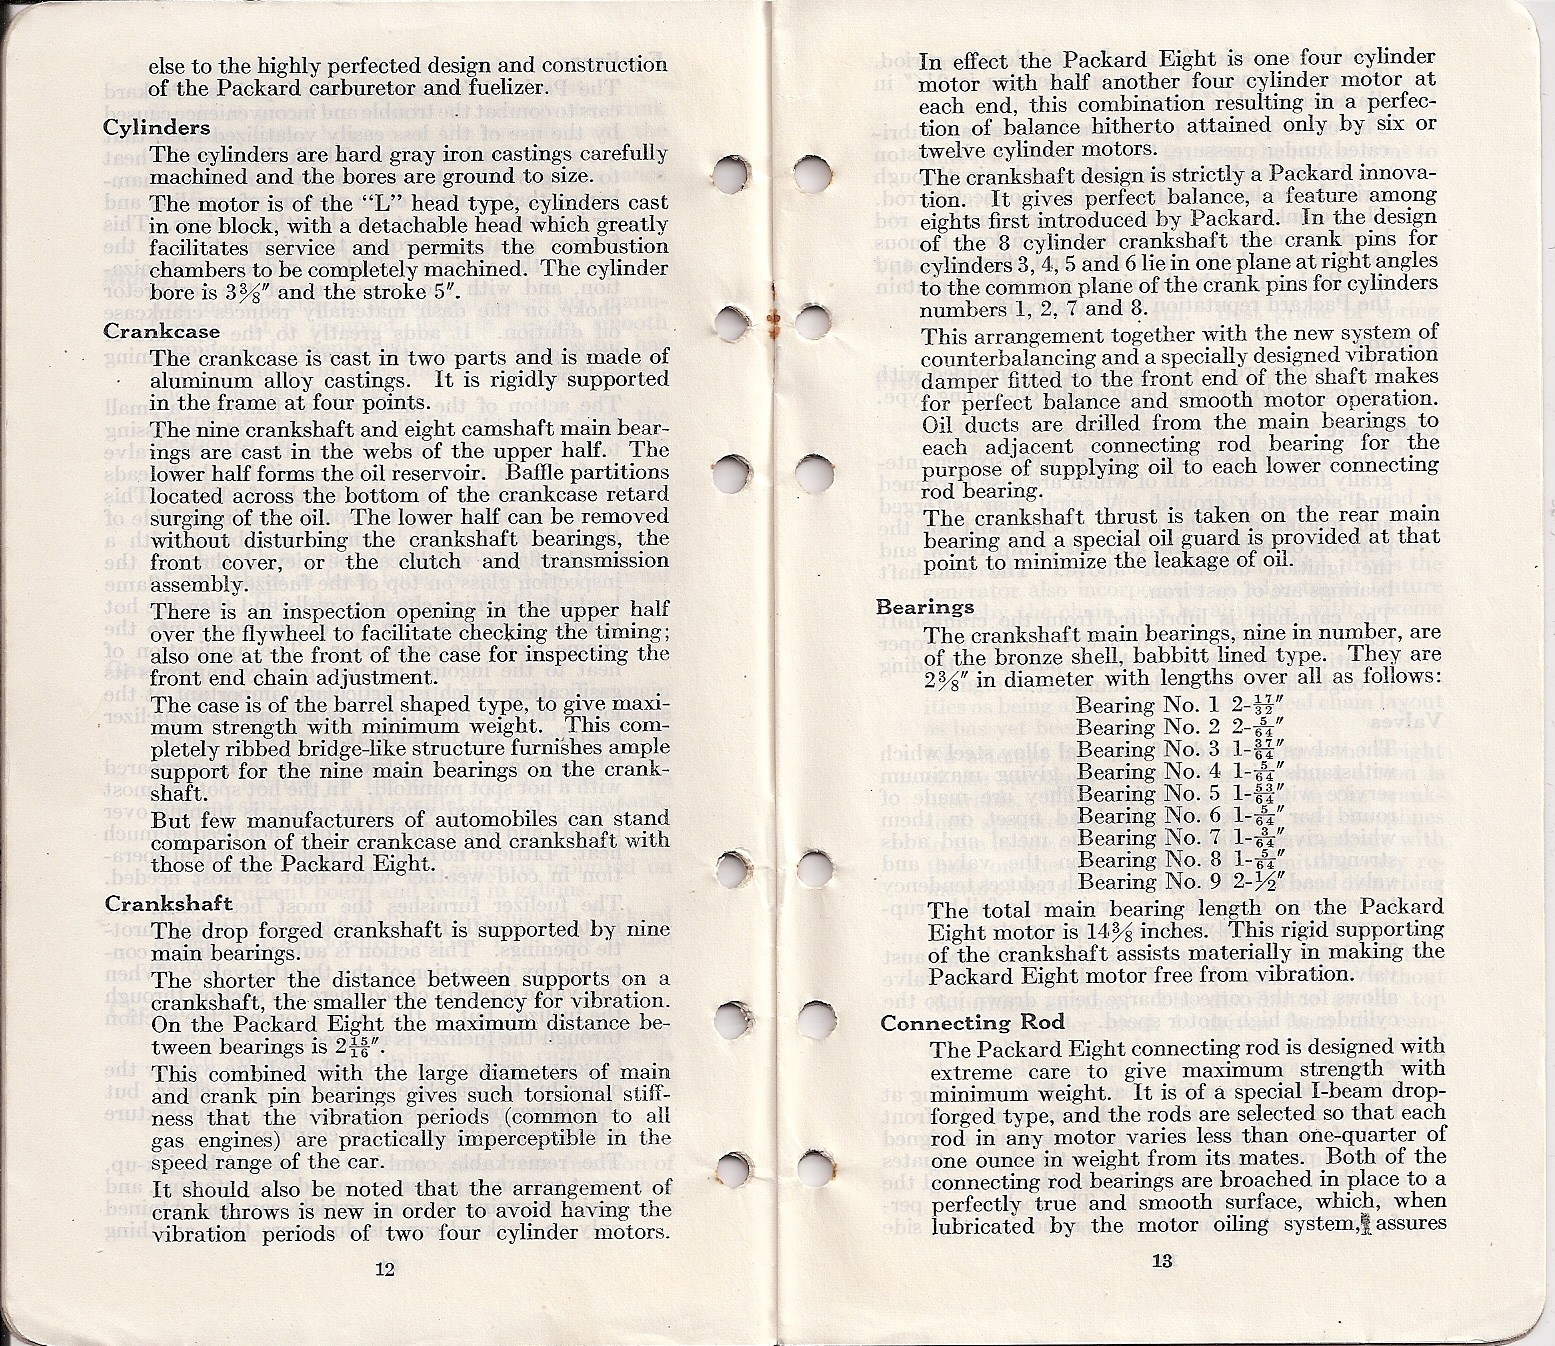 n_1925 Packard Eight Facts Book-12-13.jpg